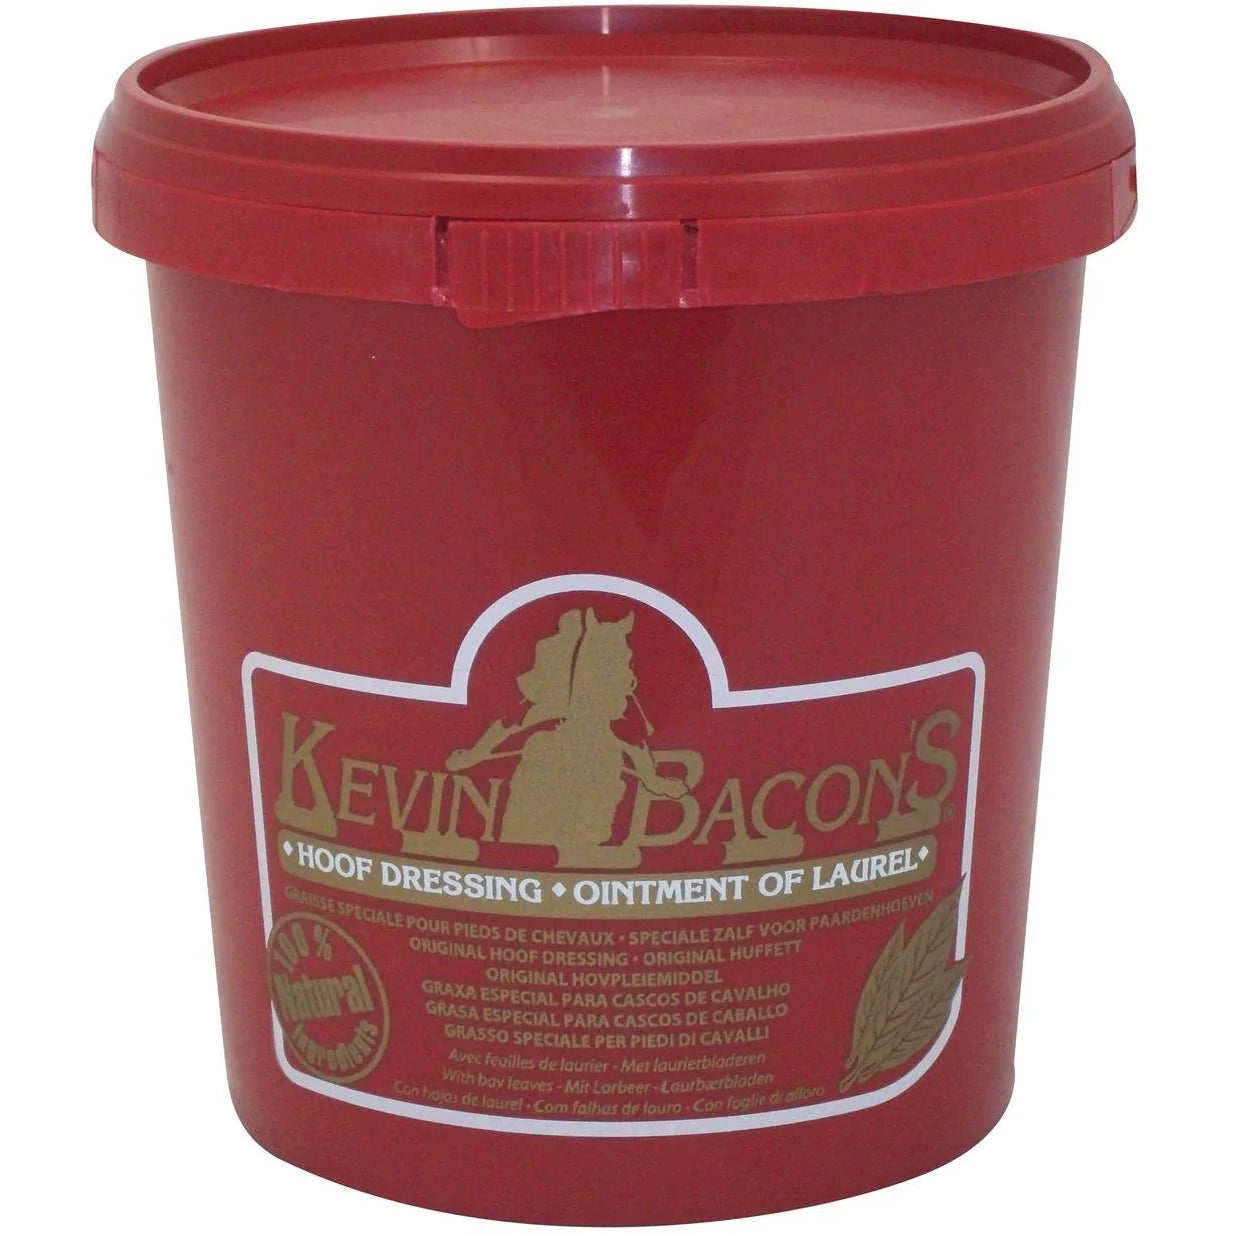 Kevin Bacons Original Natural Hoof Dressing